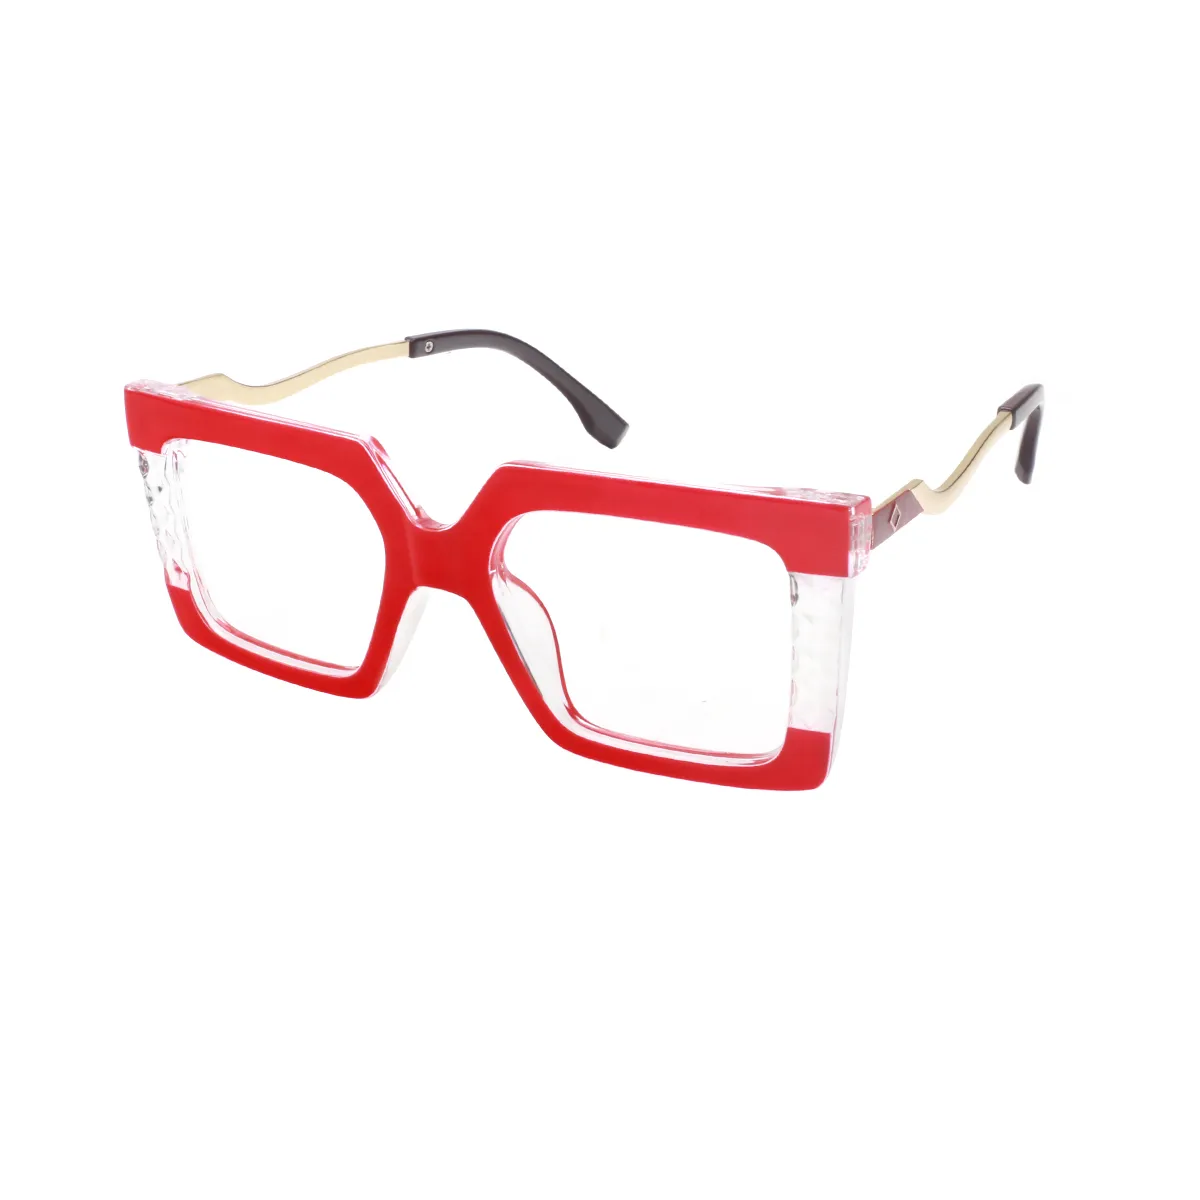 Hilda - Square Red Glasses for Women